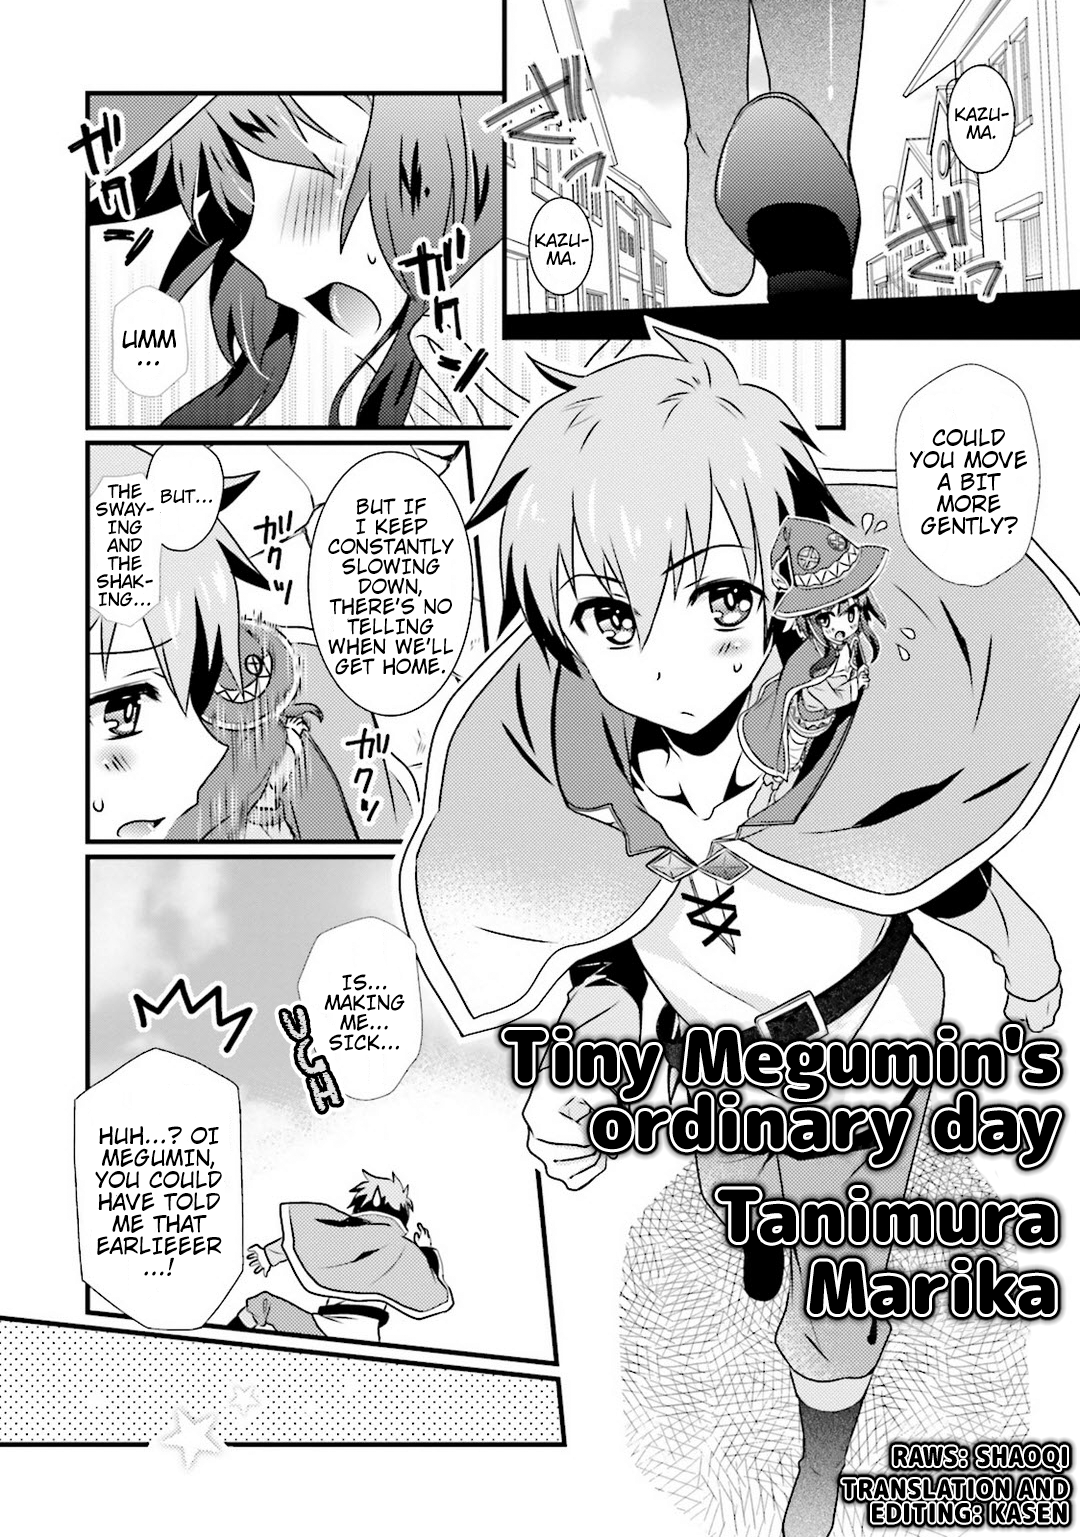 Kono Subarashii Sekai ni Shukufuku wo! Megumin Anthology - MangaDex